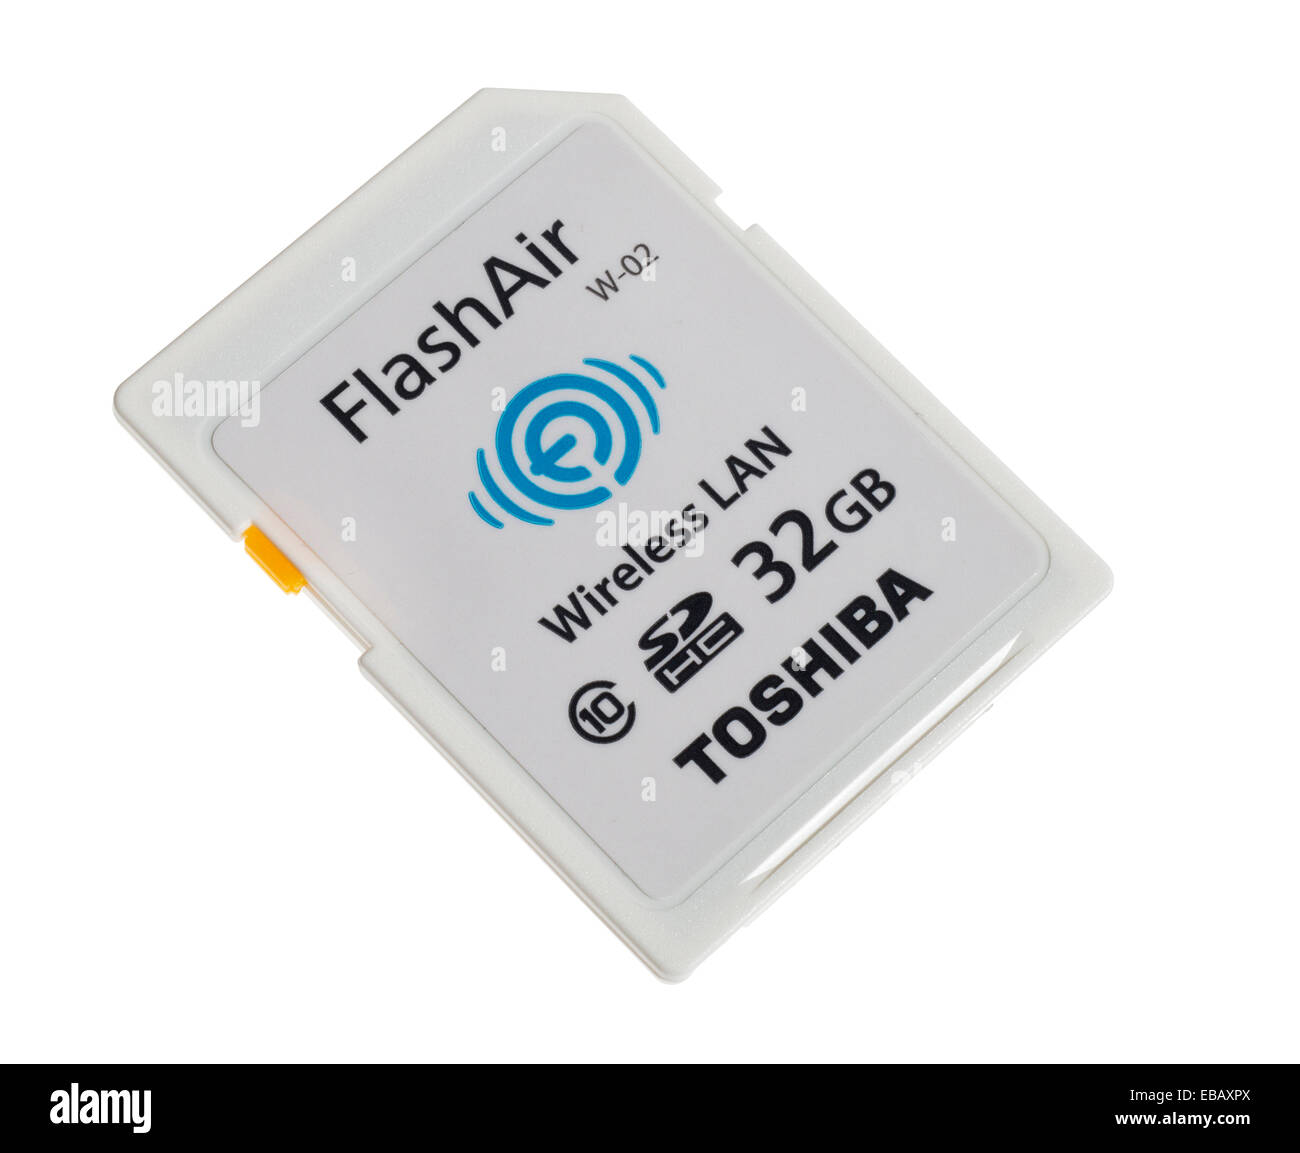 Wireless LAN SD memory card by Toshiba. 32 GB FlashAir card Stock Photo -  Alamy